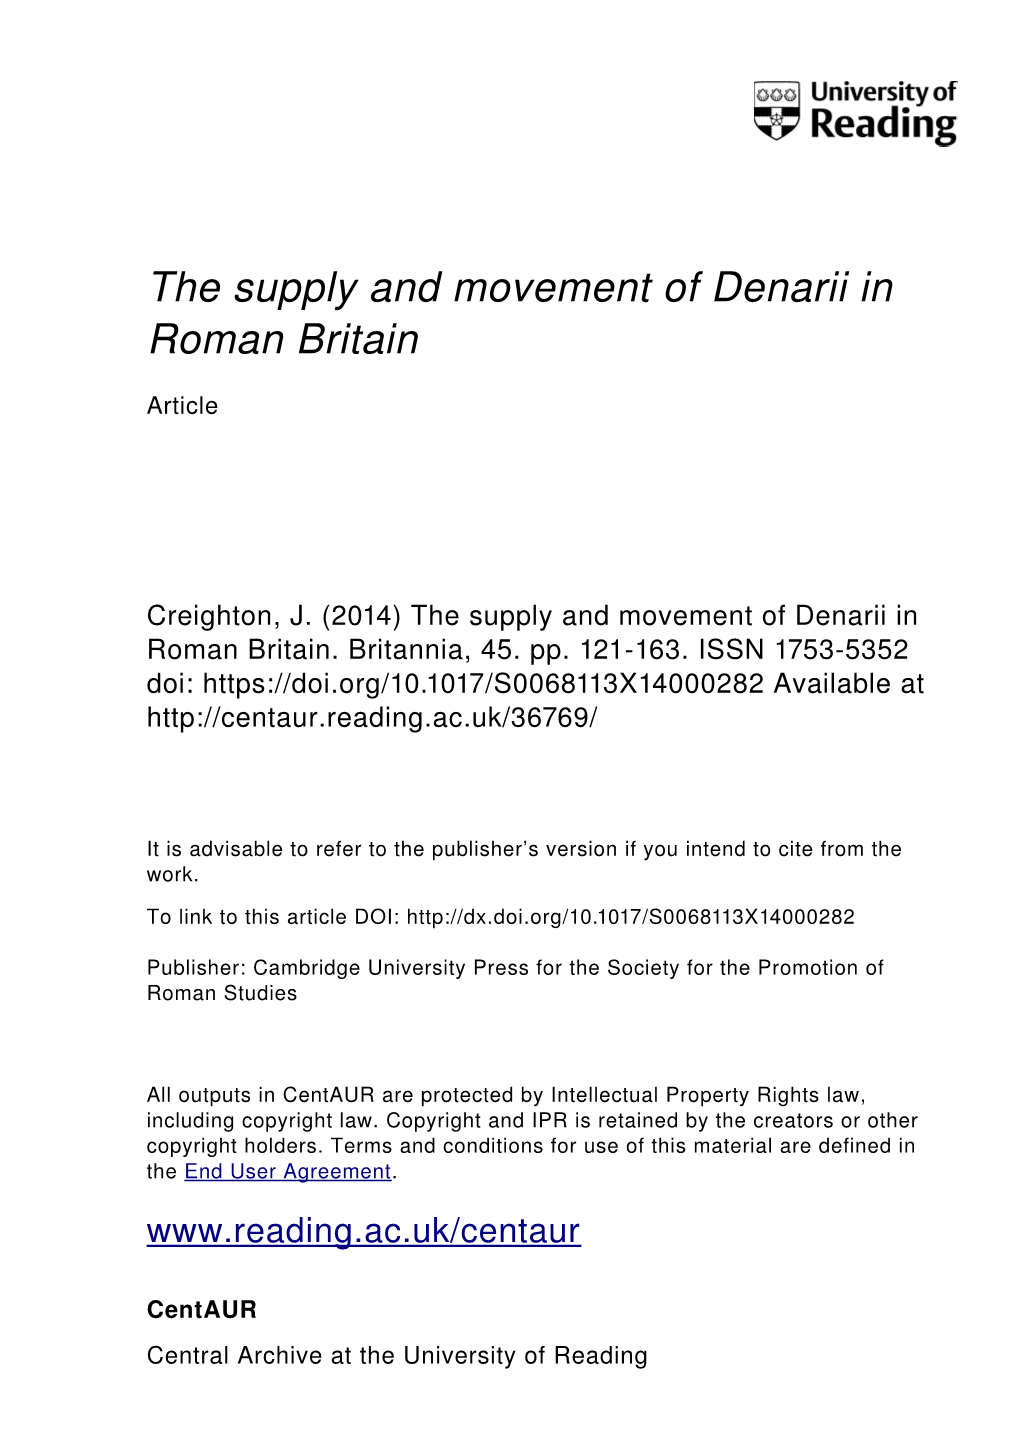 The Supply and Movement of Denarii in Roman Britain